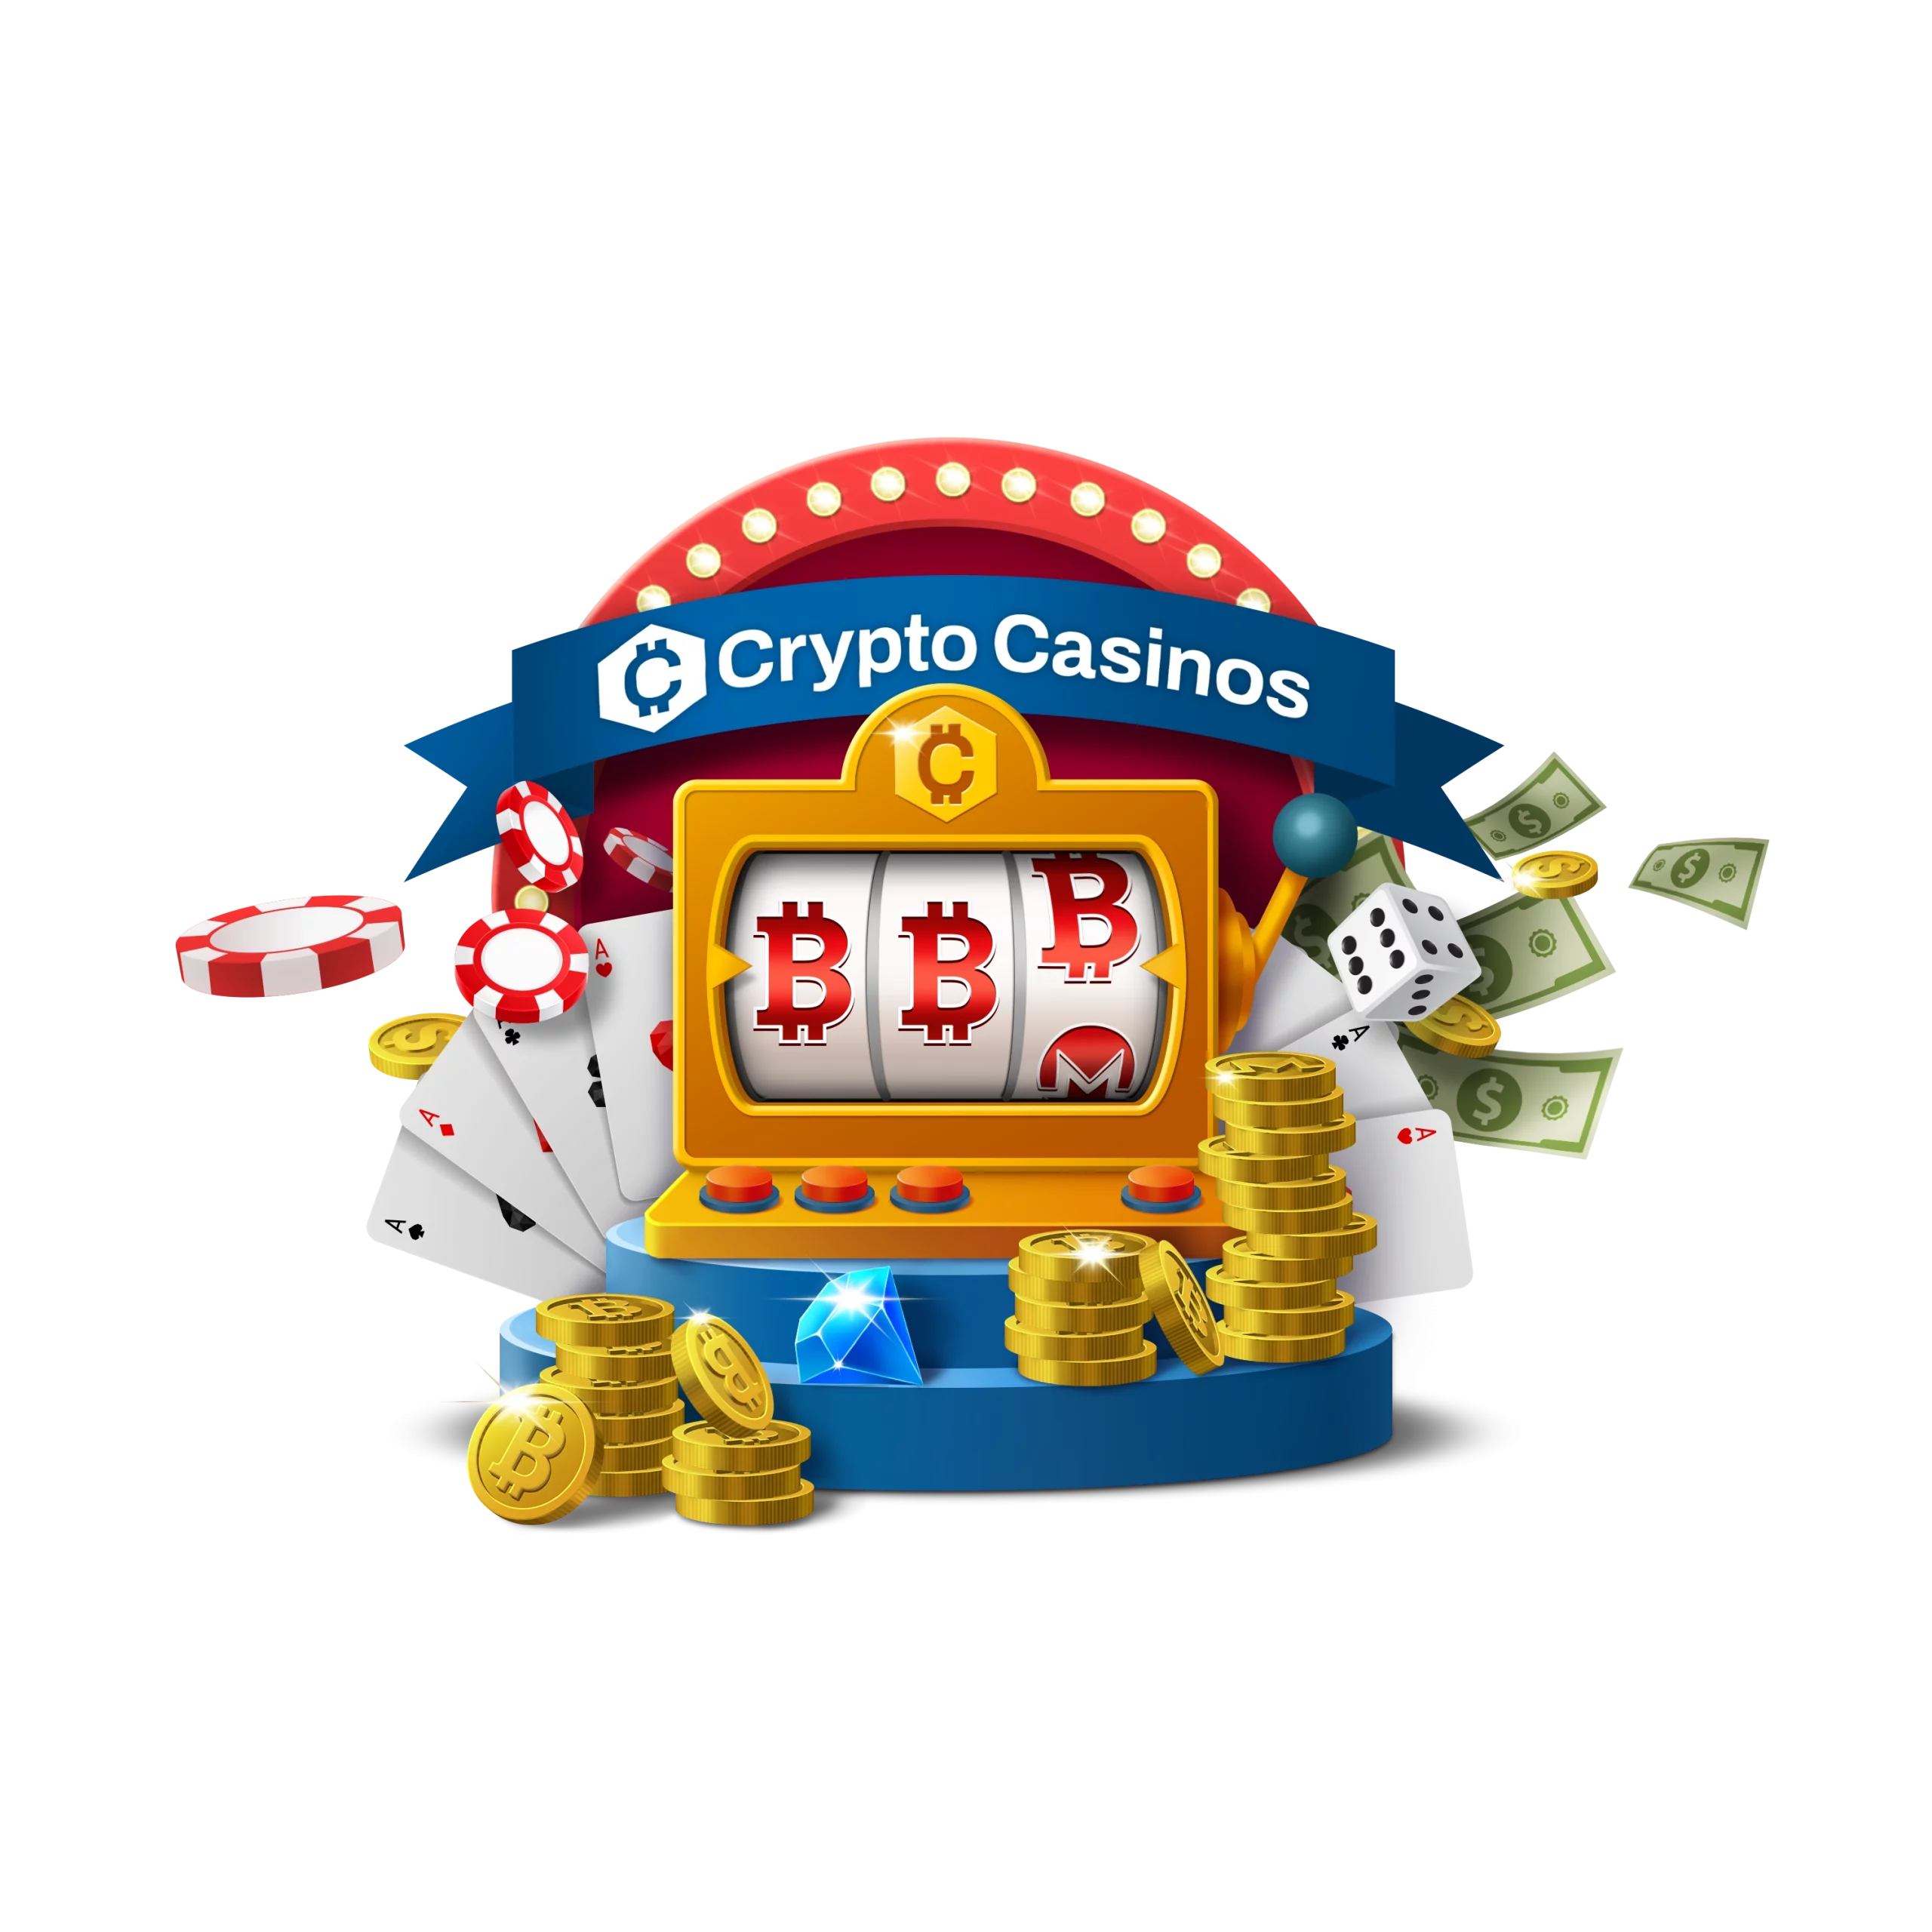 Slot machine with crypto theme and cryptocasinos logo